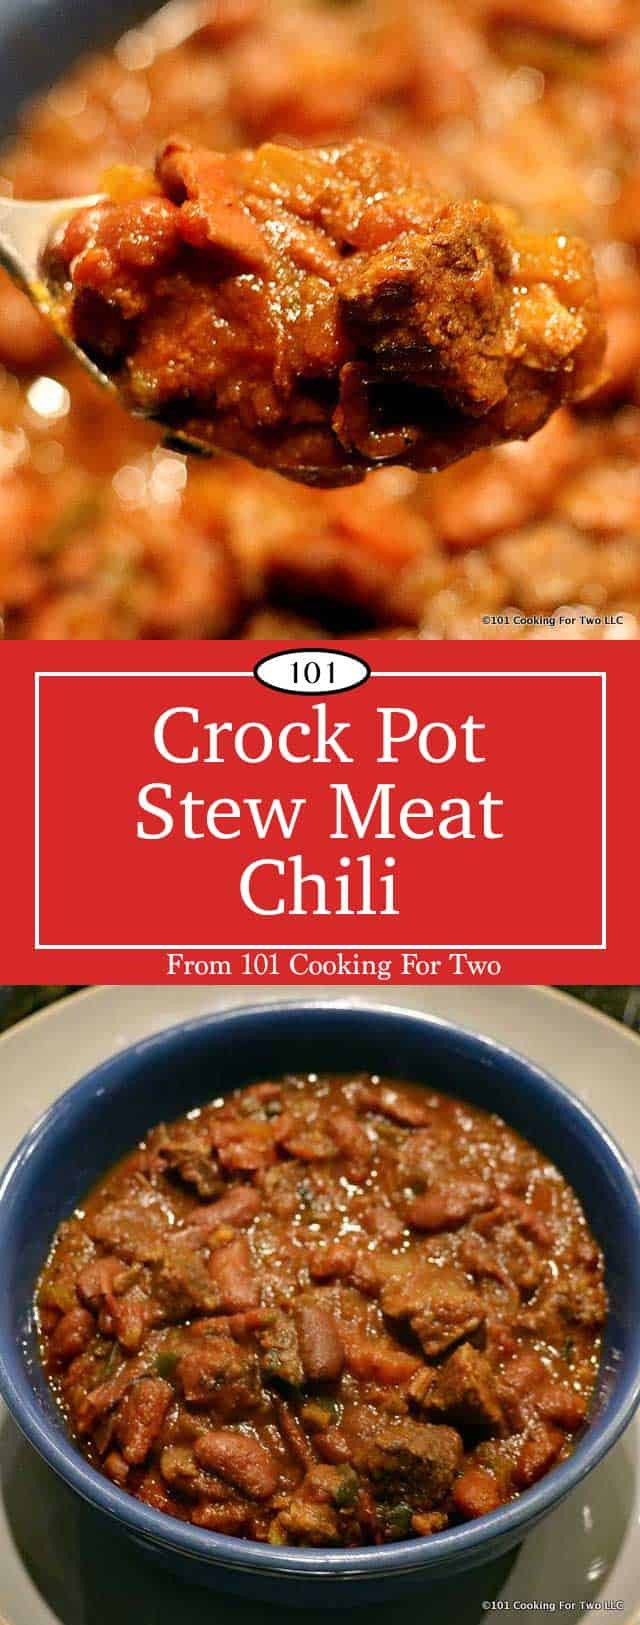 Stew Beef Chili
 Crock Pot Stew Meat Chili